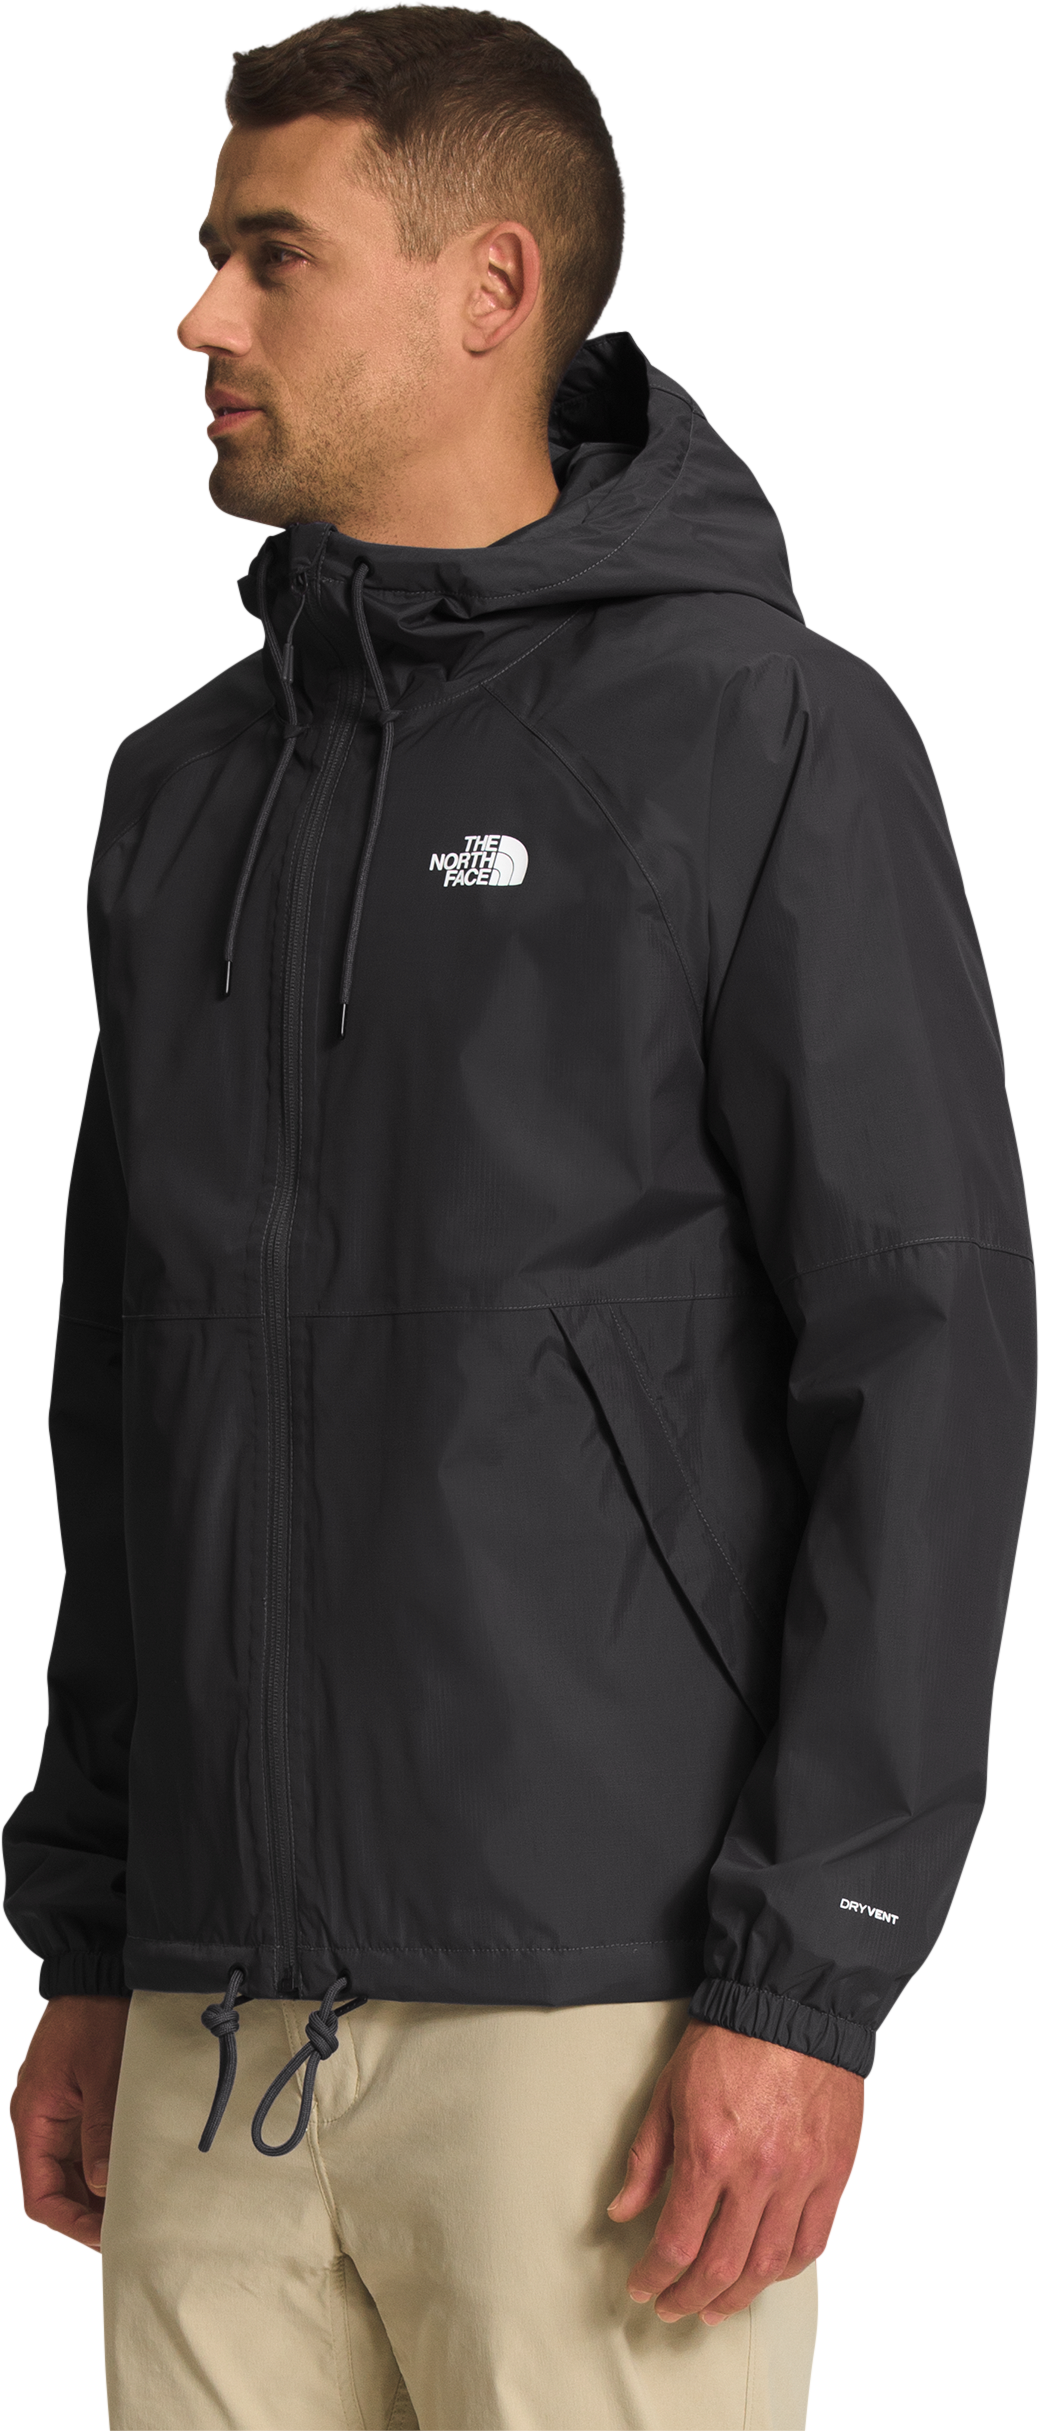 The North Face Antora Rain Full-Zip Long-Sleeve Hoodie for Men - TNF Black - 2XL